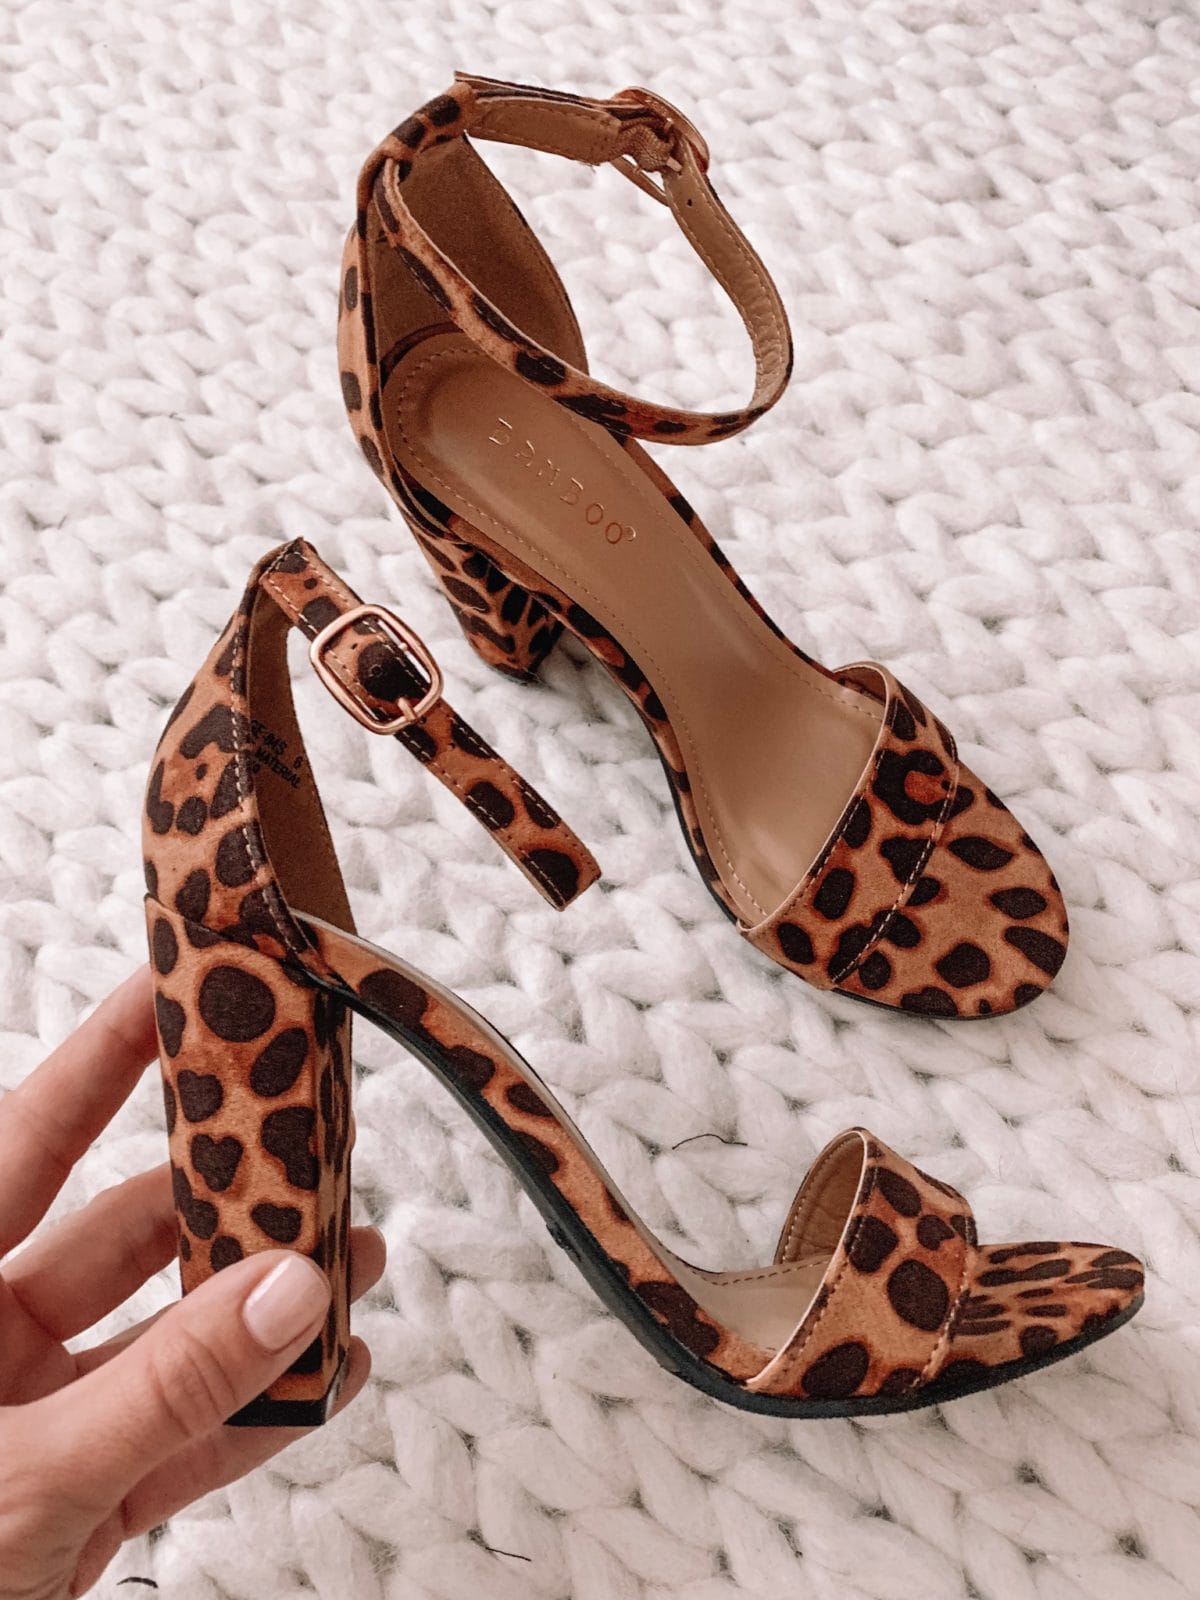 Leopard heels from Amazon